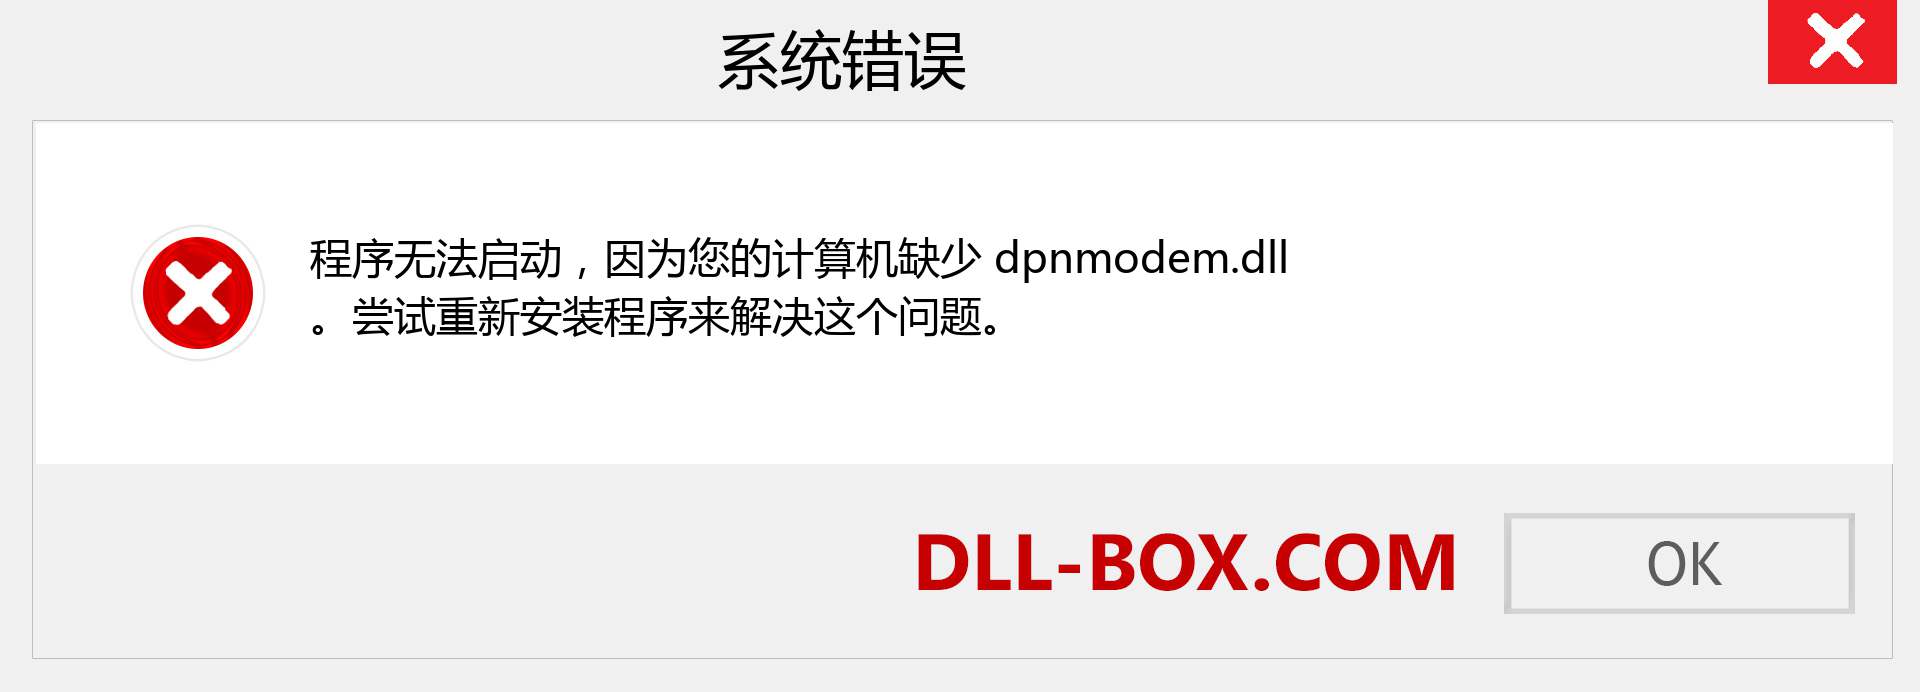 dpnmodem.dll 文件丢失？。 适用于 Windows 7、8、10 的下载 - 修复 Windows、照片、图像上的 dpnmodem dll 丢失错误